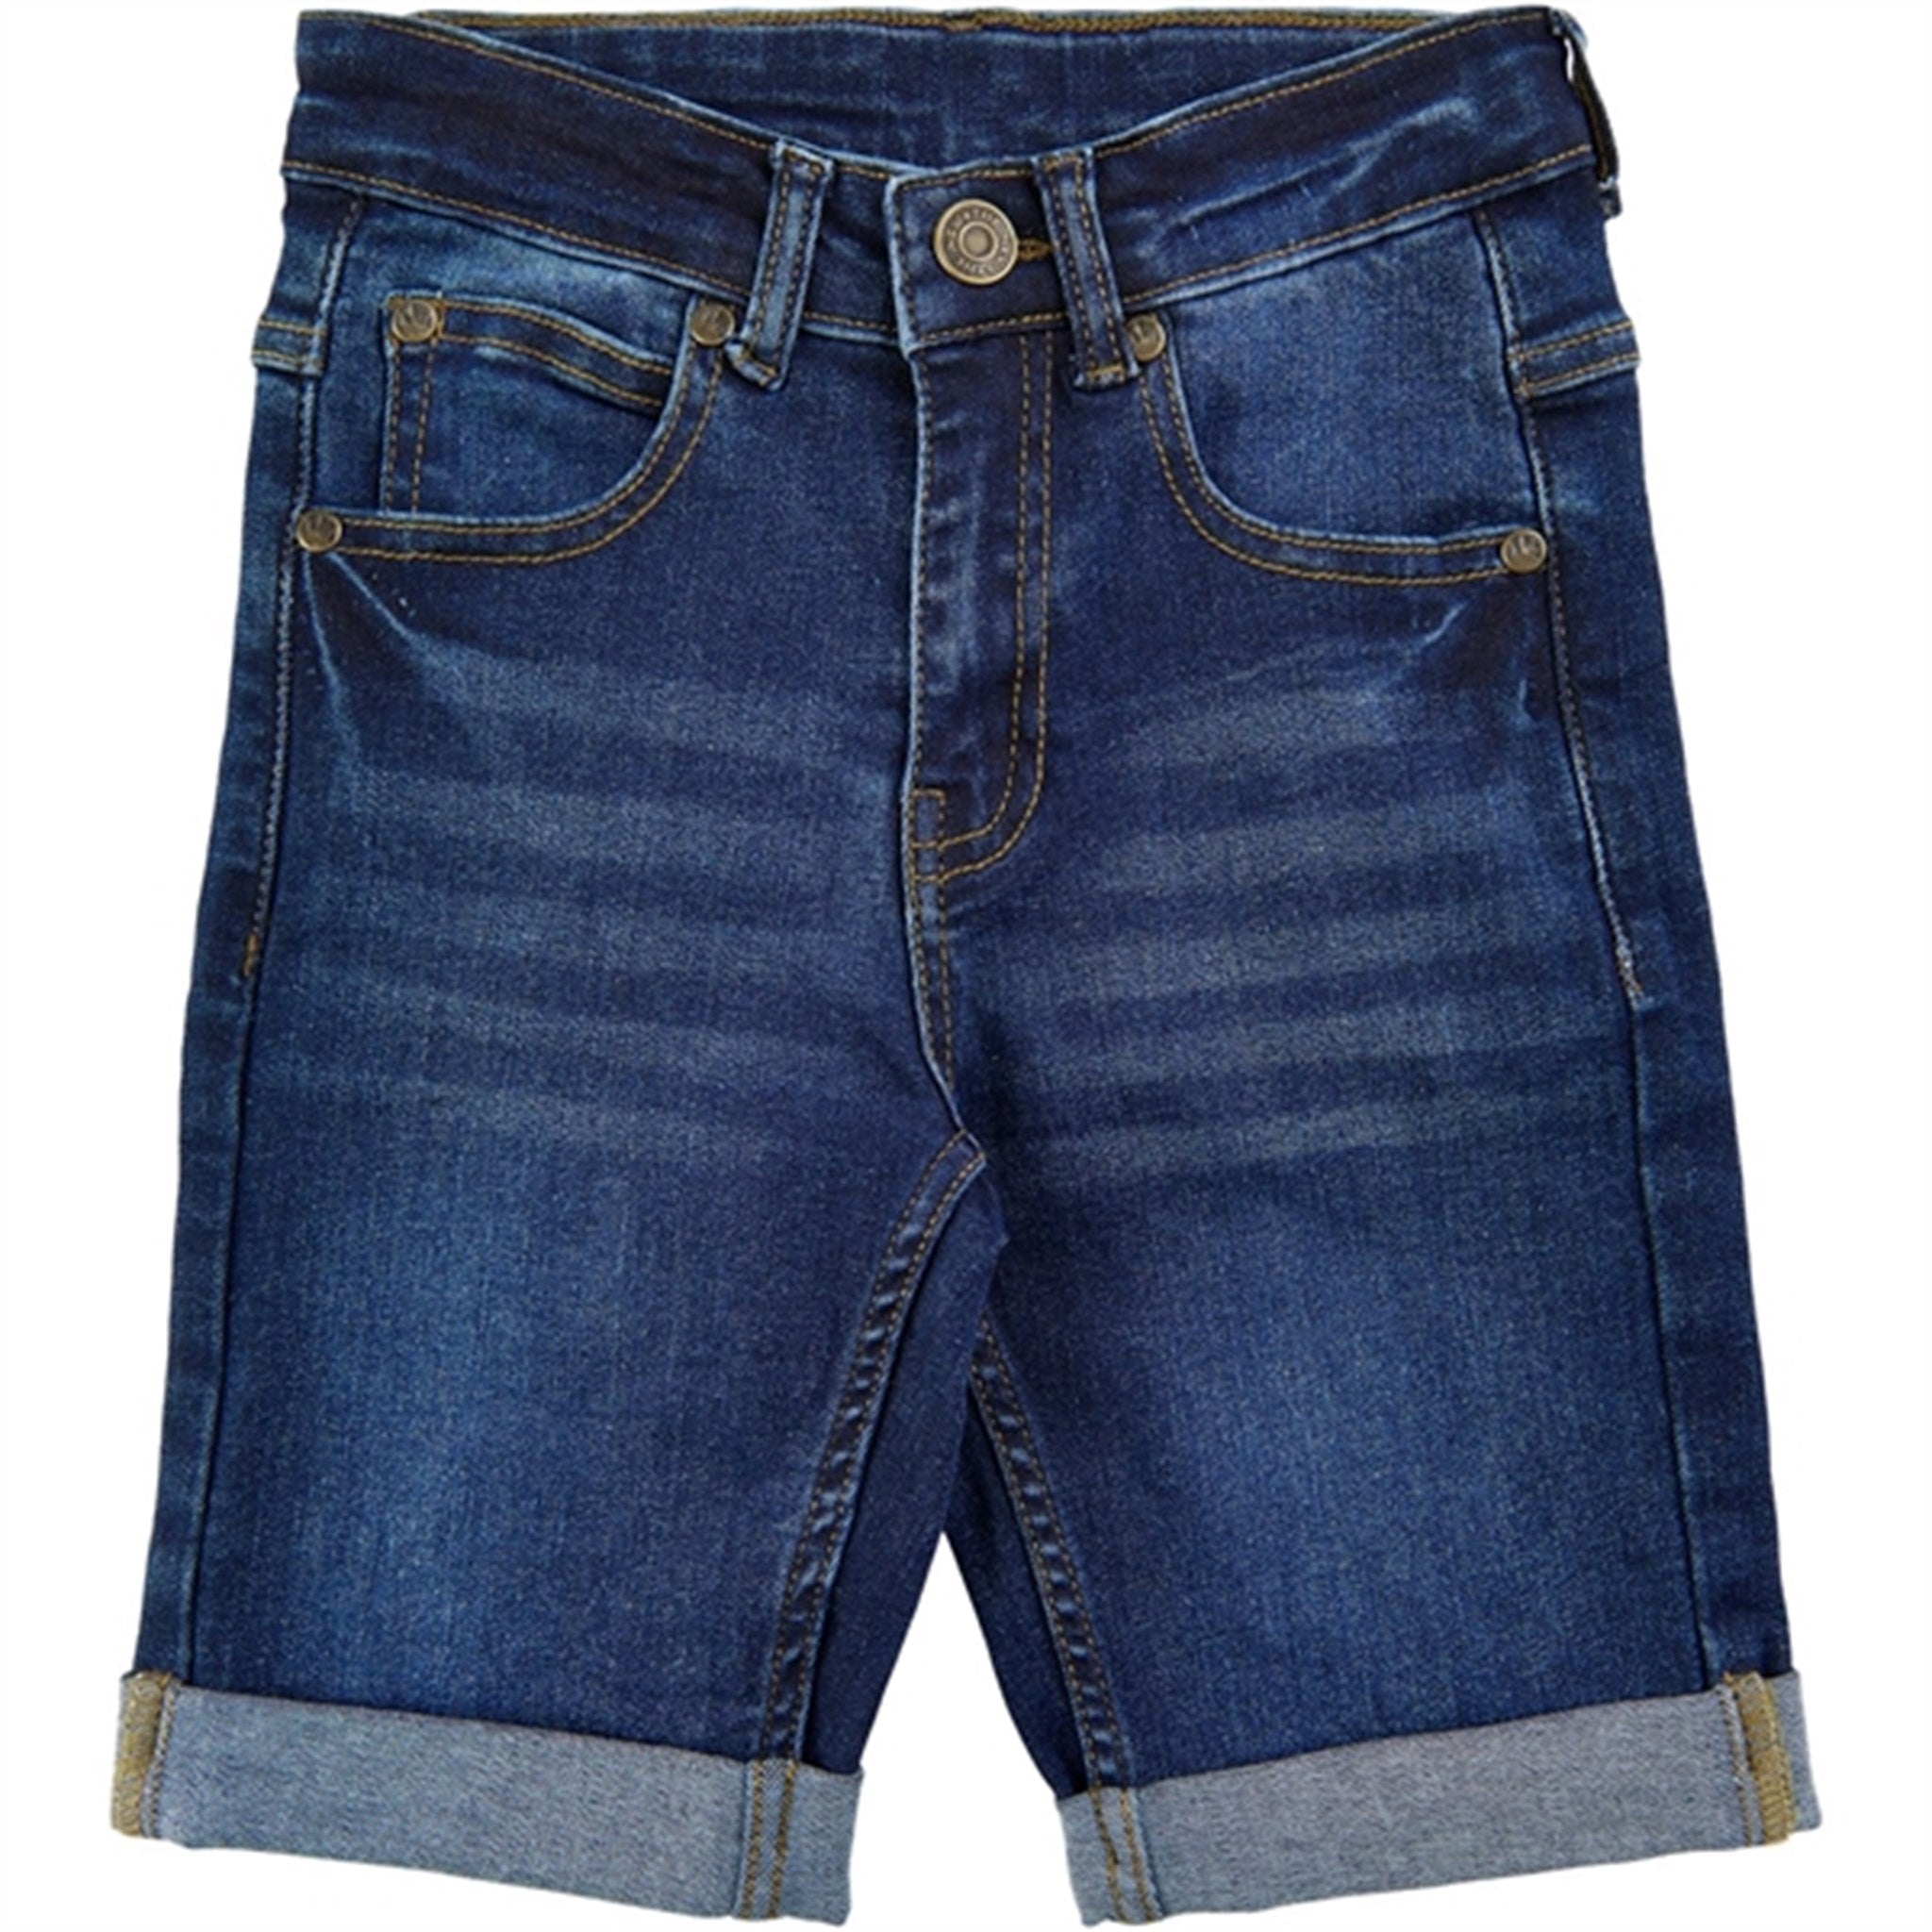 THE NEW 890 Dark Blue Denim Shorts